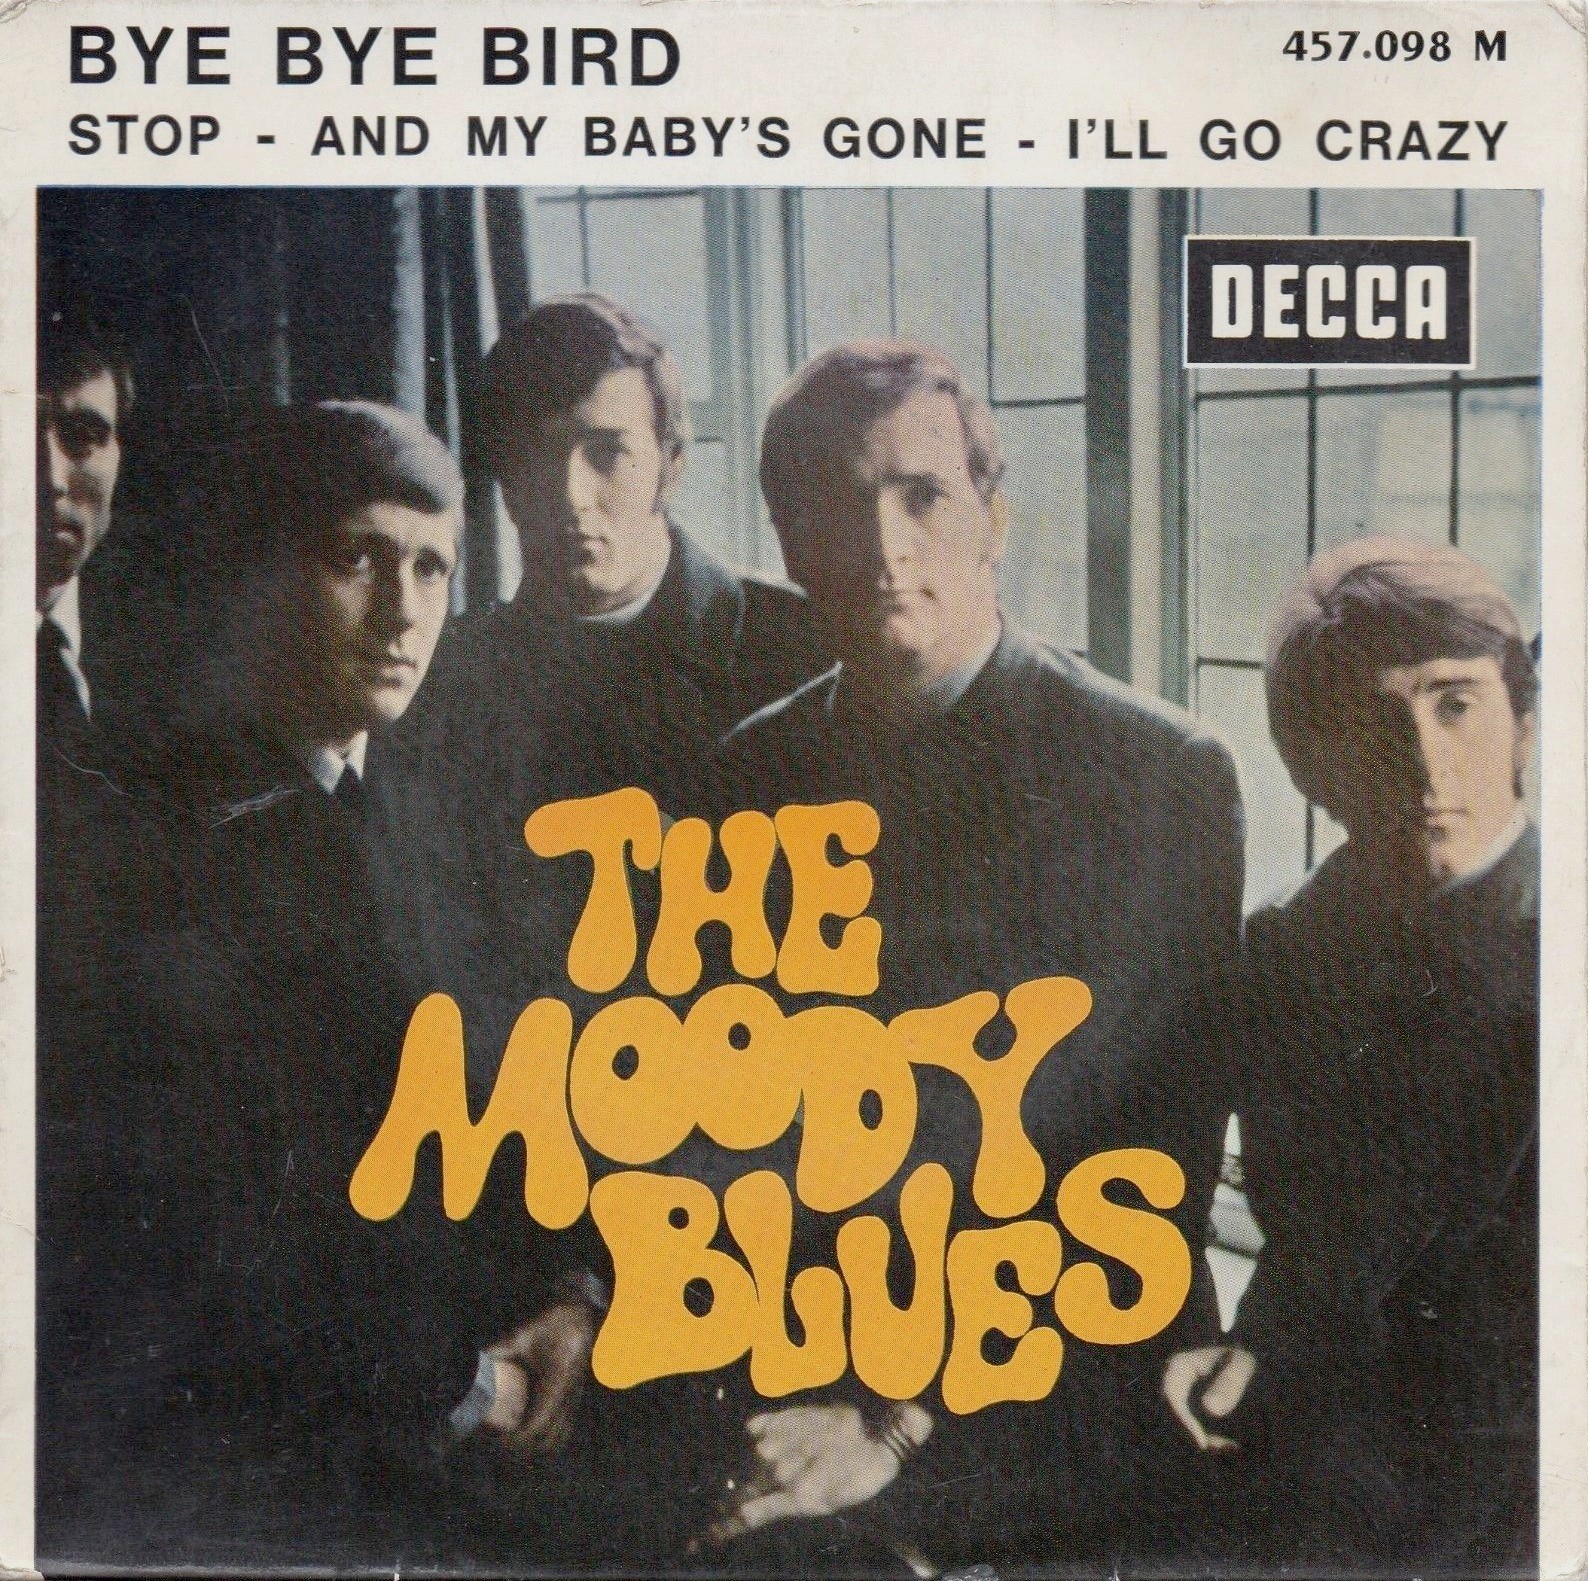 Les EPs français: MOODY BLUES - 1966 - FR-DECCA 457.098 - Bye bye bird